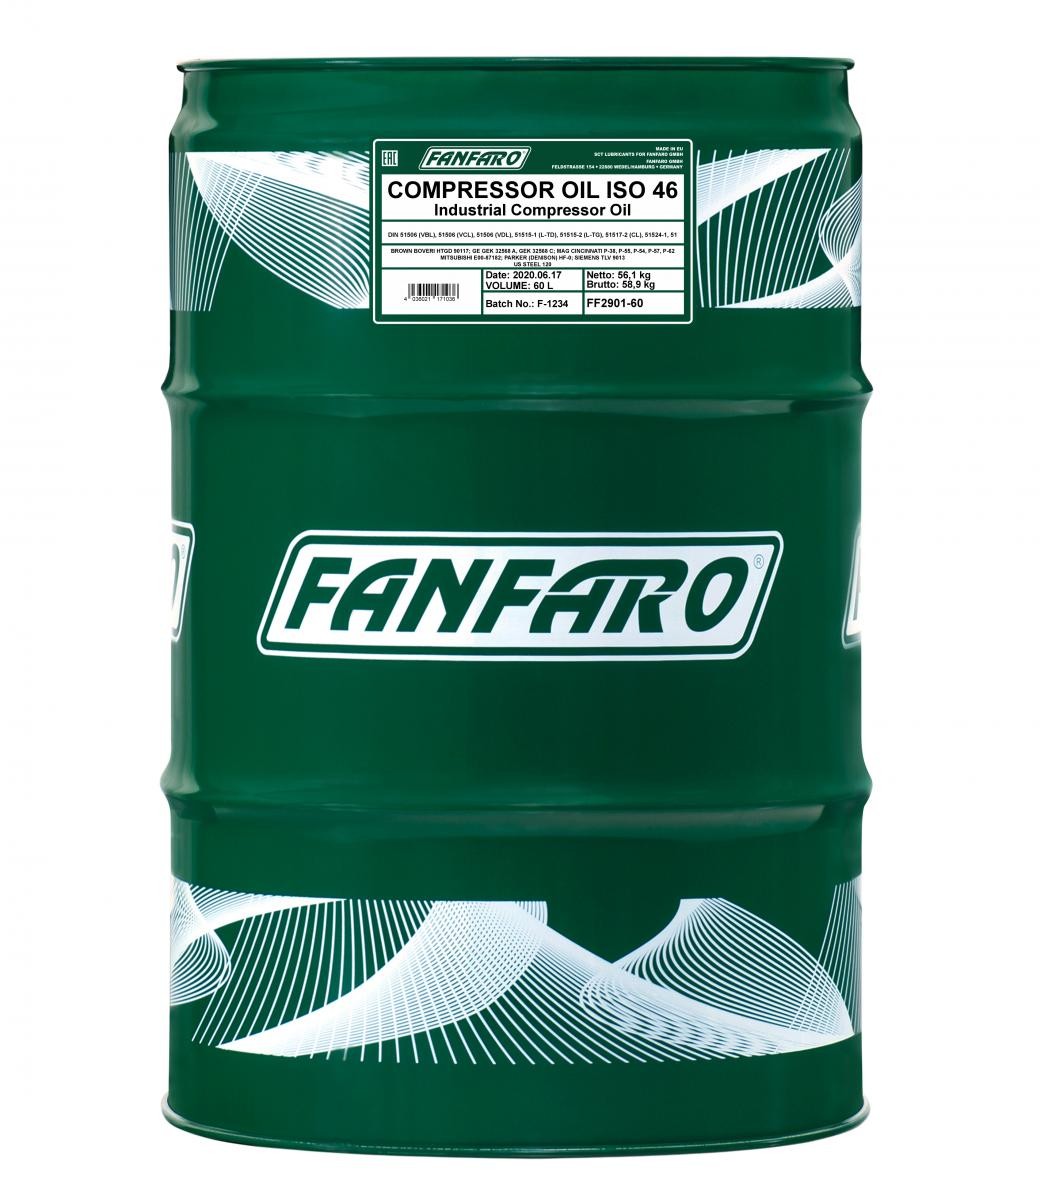 Ac compressor FANFARO Compressor Oil ISO 46 VG 46 - FF2901-60